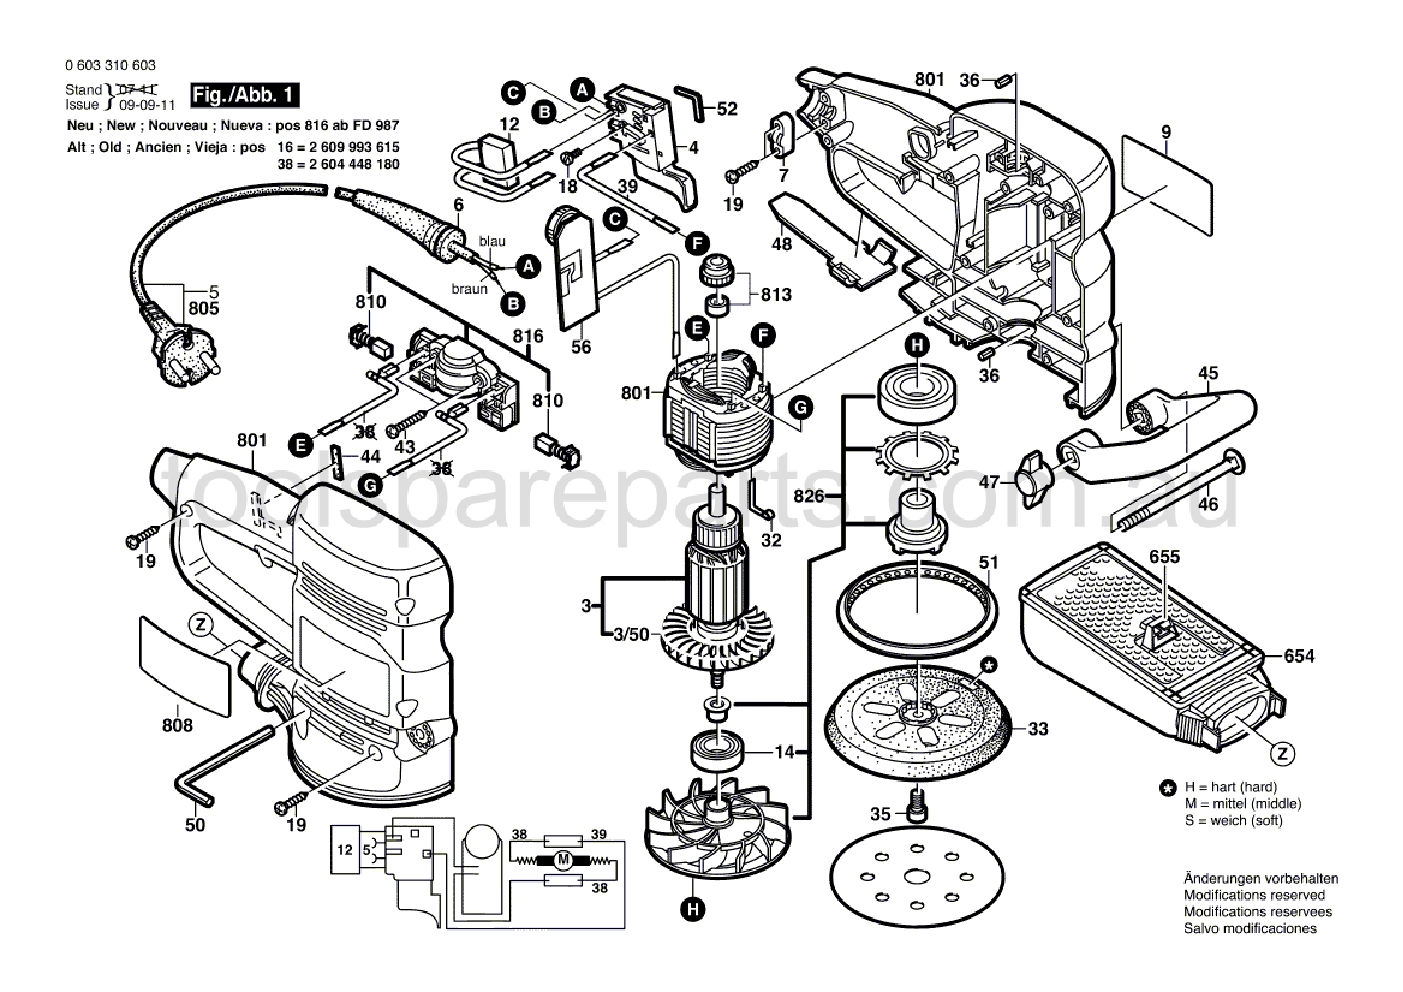 Bosch PEX 400 AE 0603310637  Diagram 1